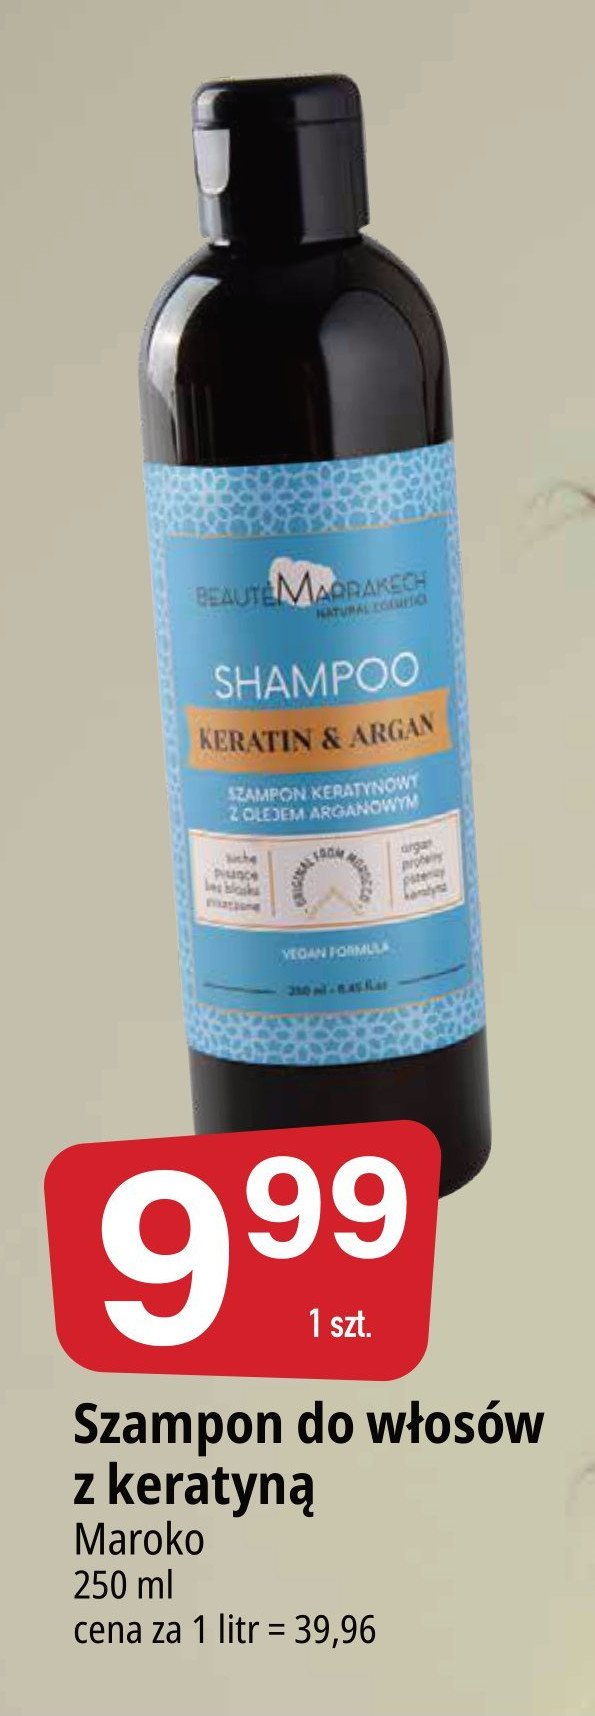 beaute marrakech szampon arganowy z keratyną